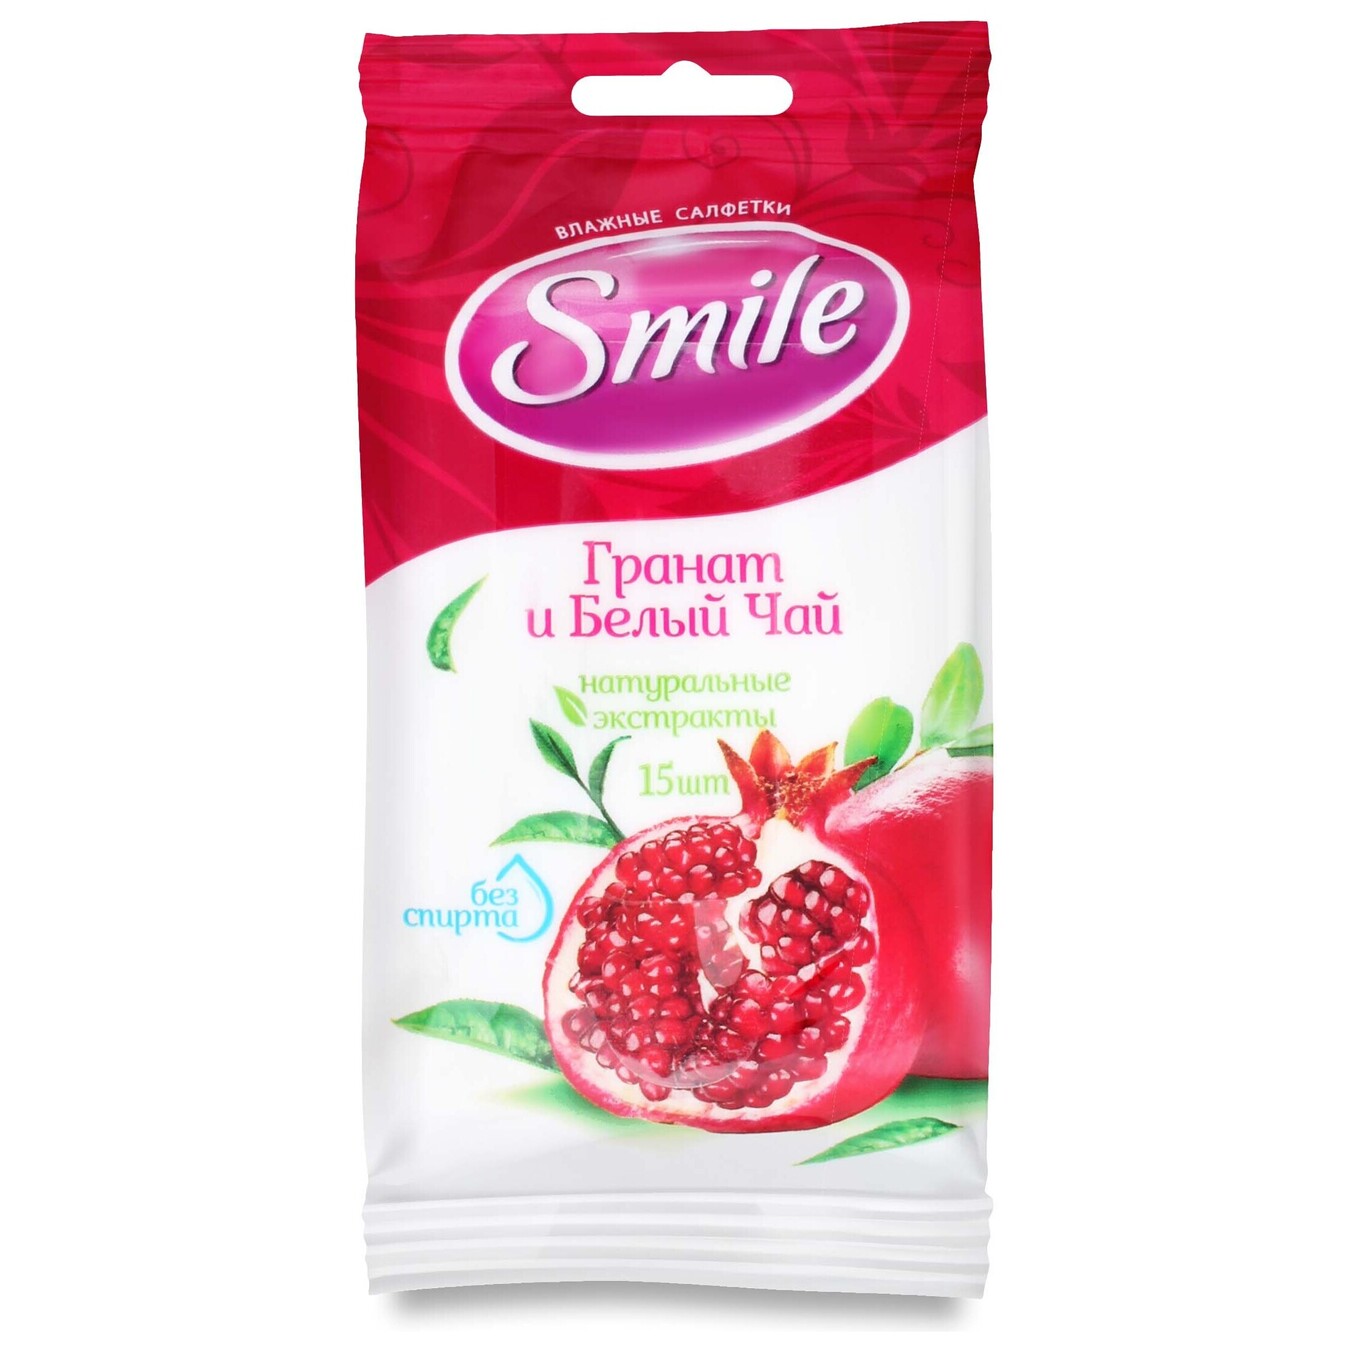 Smile Pomegranate and White Tea Wet Wipes 15pcs
